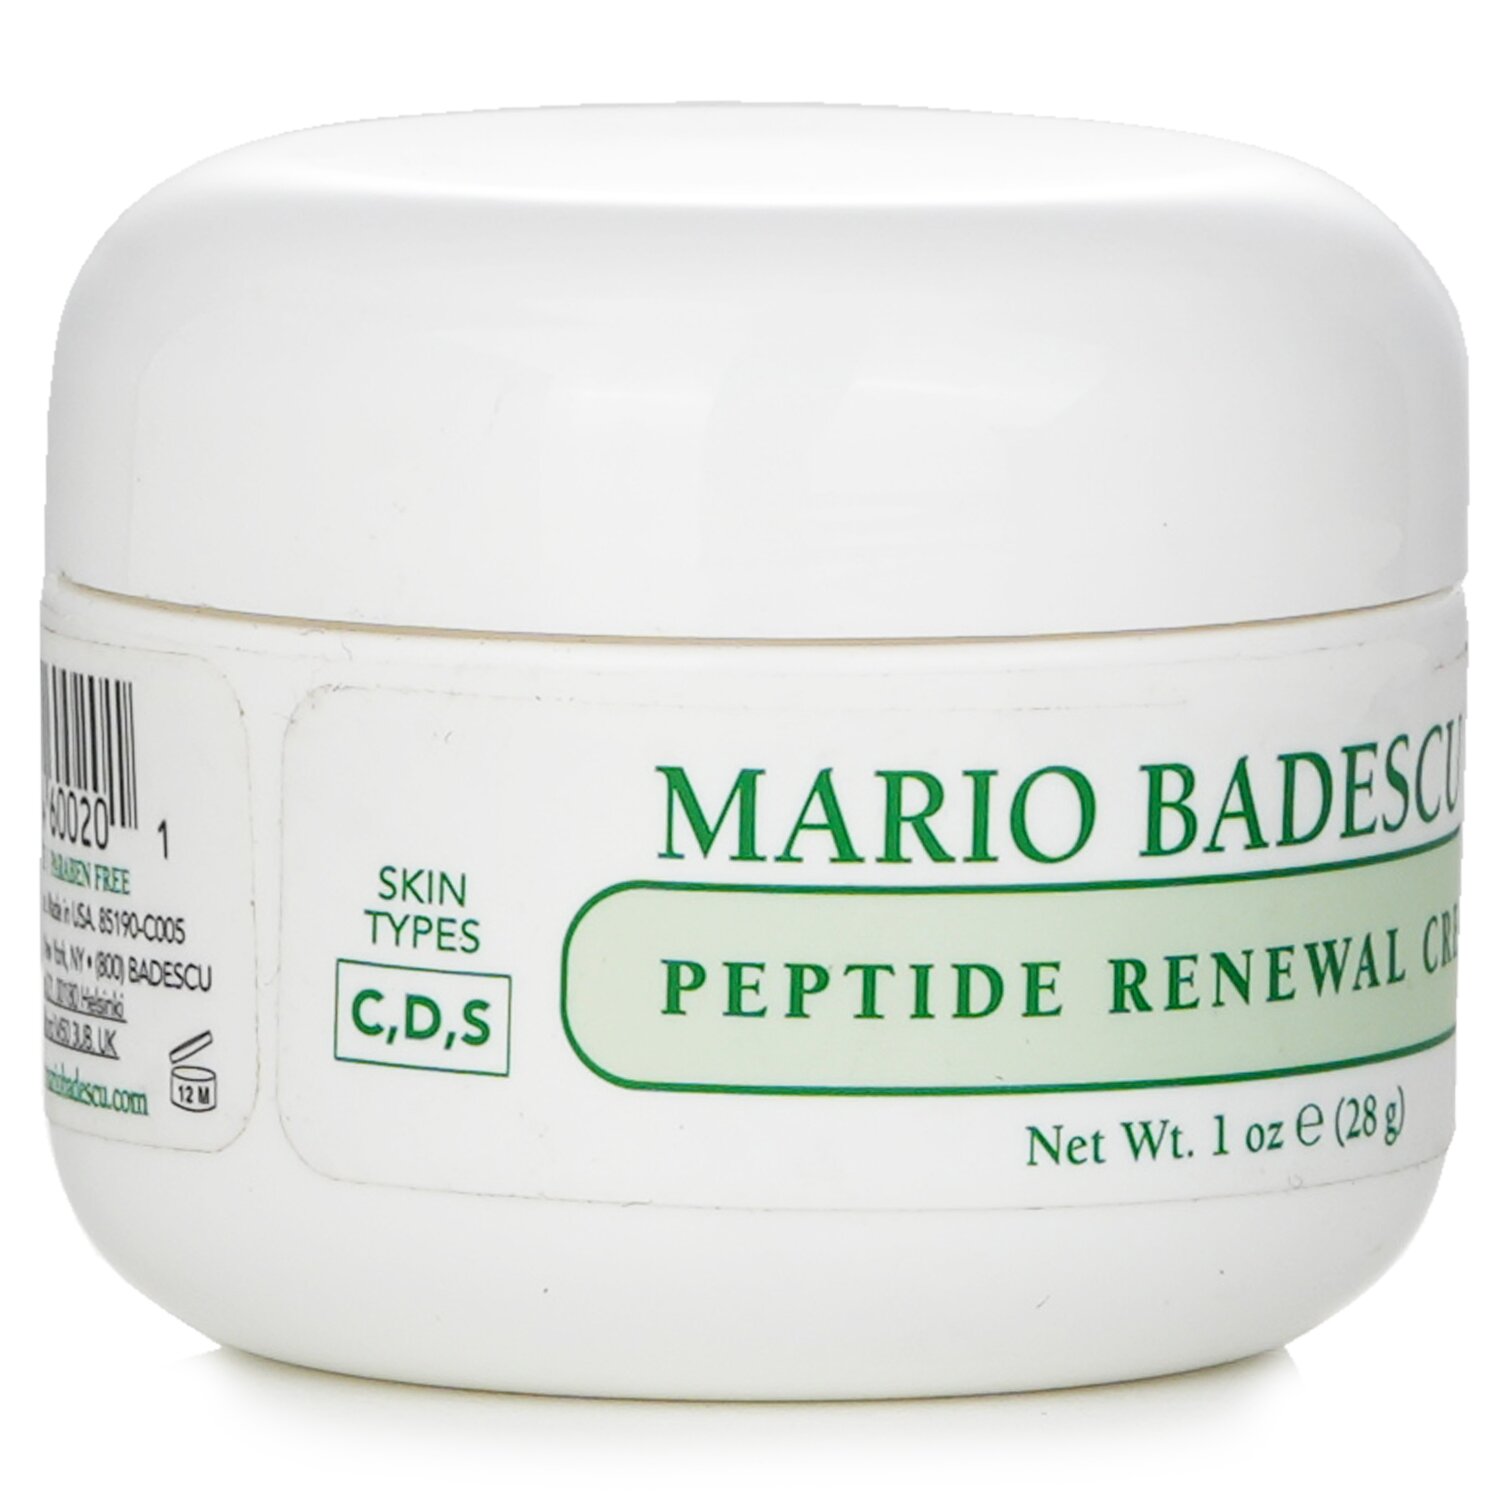 Mario Badescu Peptide Renewal Cream - For Combination/ Dry/ Sensitive Skin Types 29ml/1oz